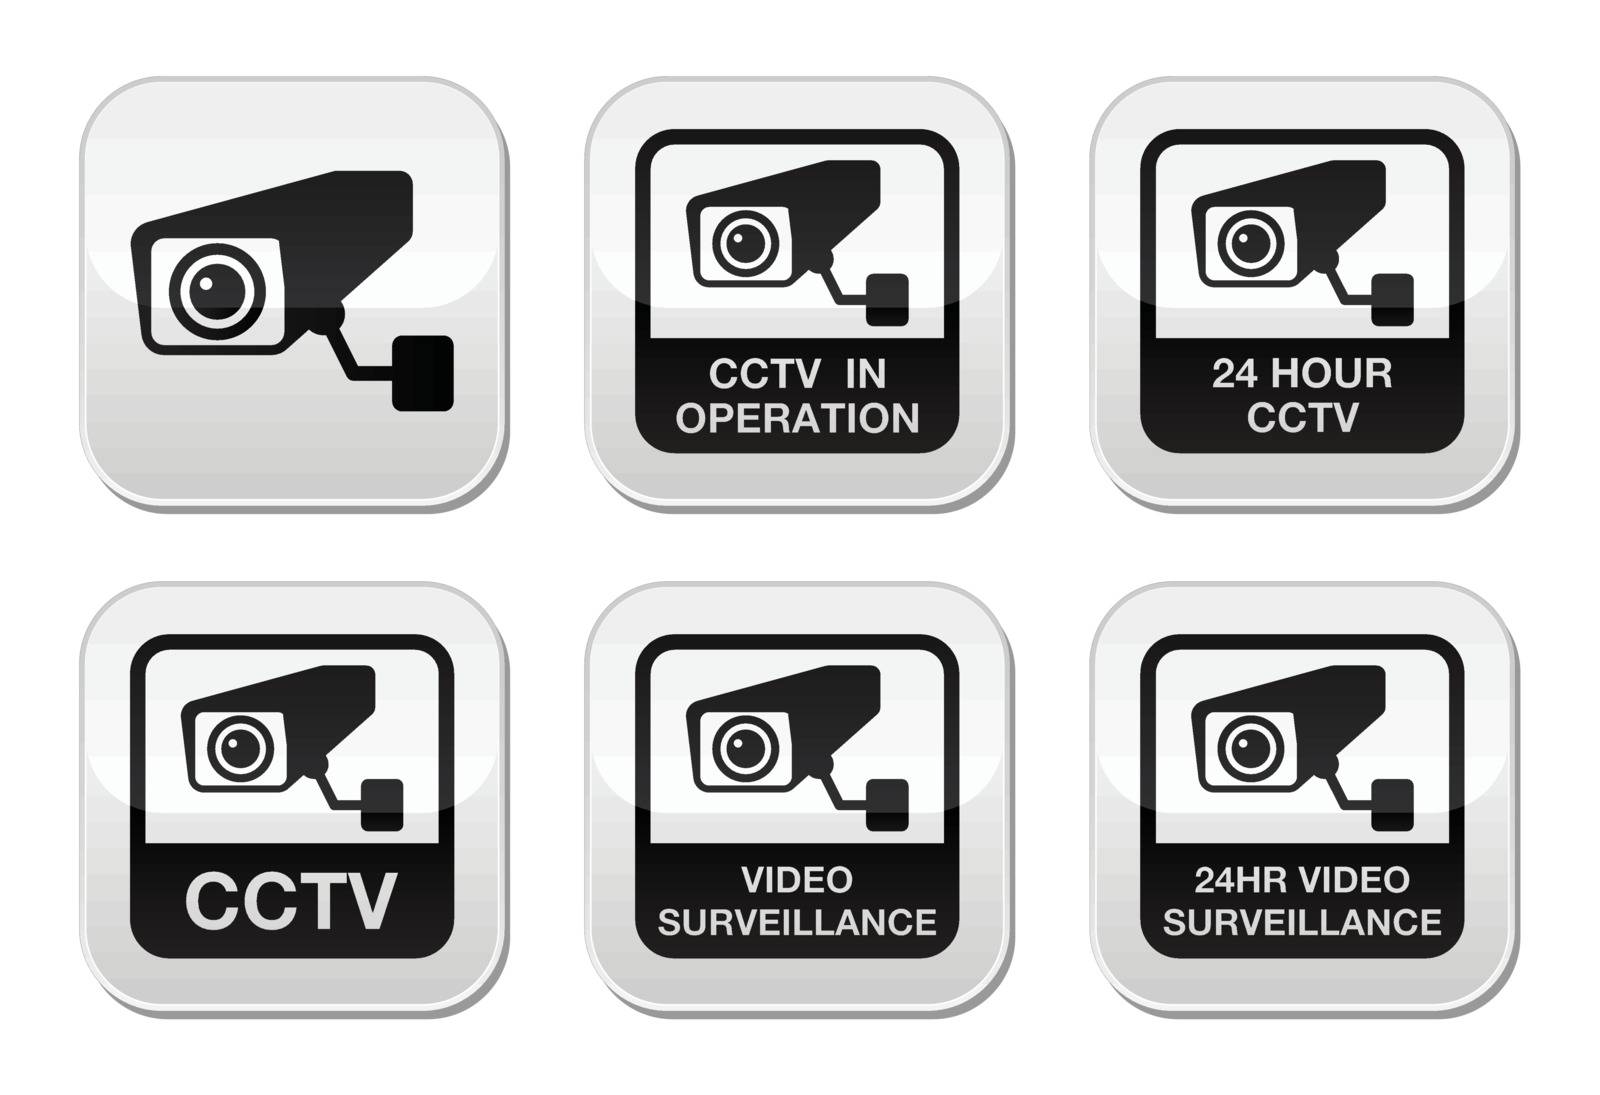 CCTV camera, Video surveillance buttons set by RedKoala